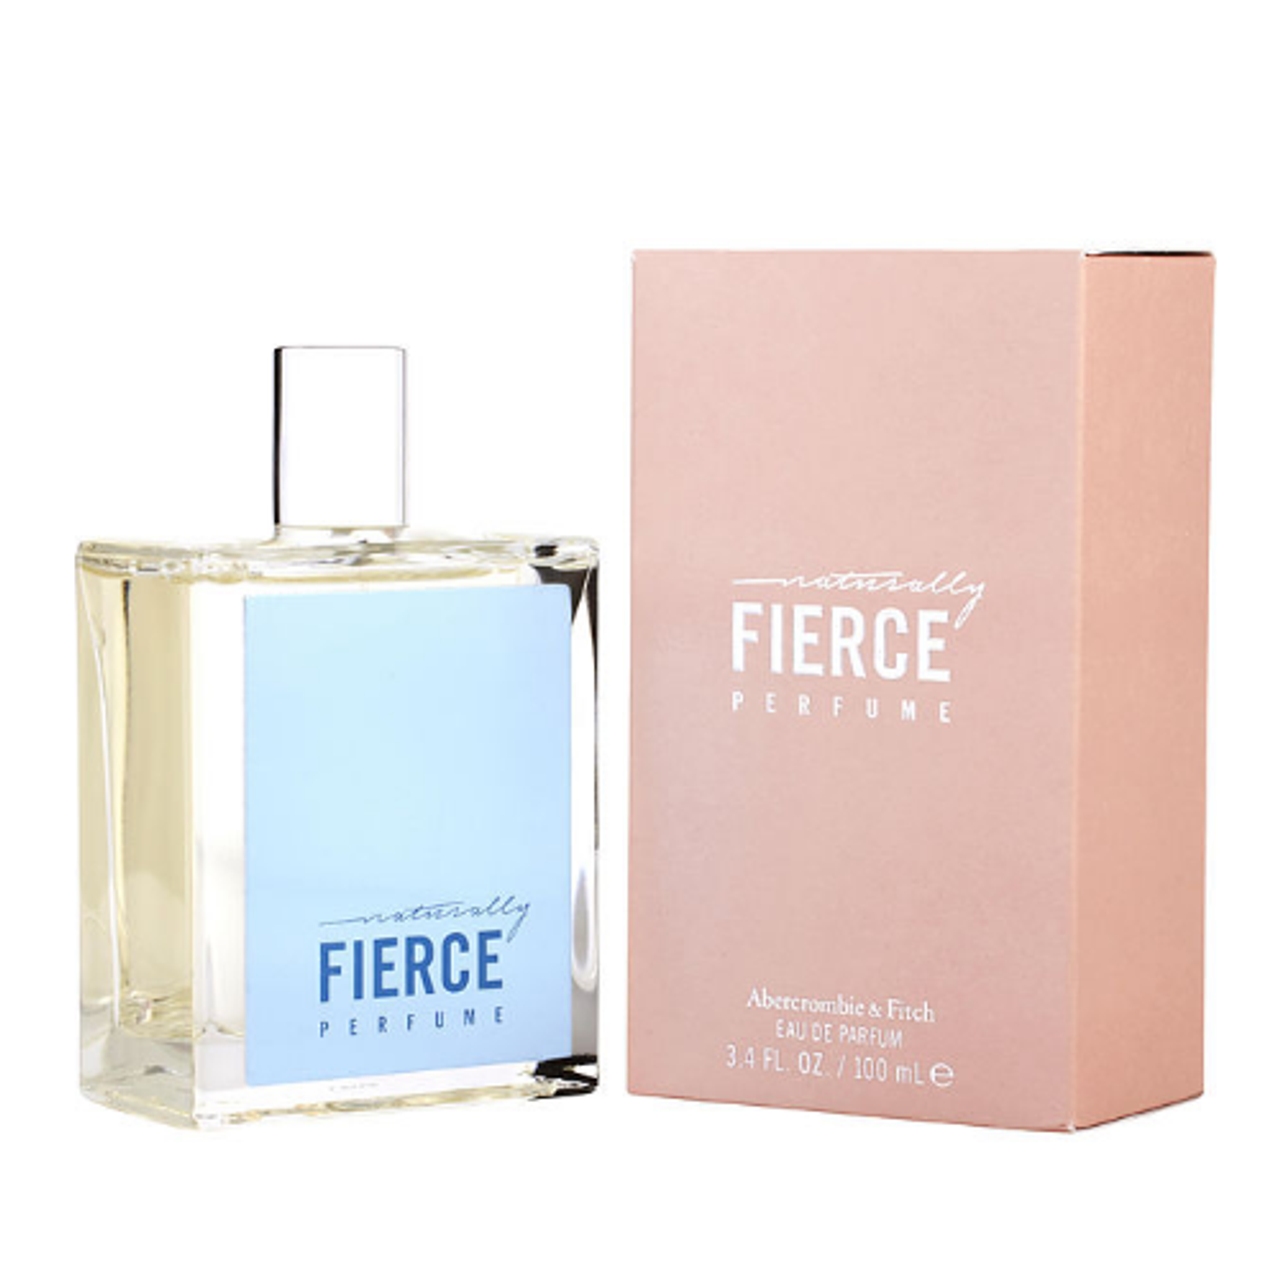 Perfume Abercrombie & Fitch Authentic Eau de Toilette 3.4oz Spray With  Package